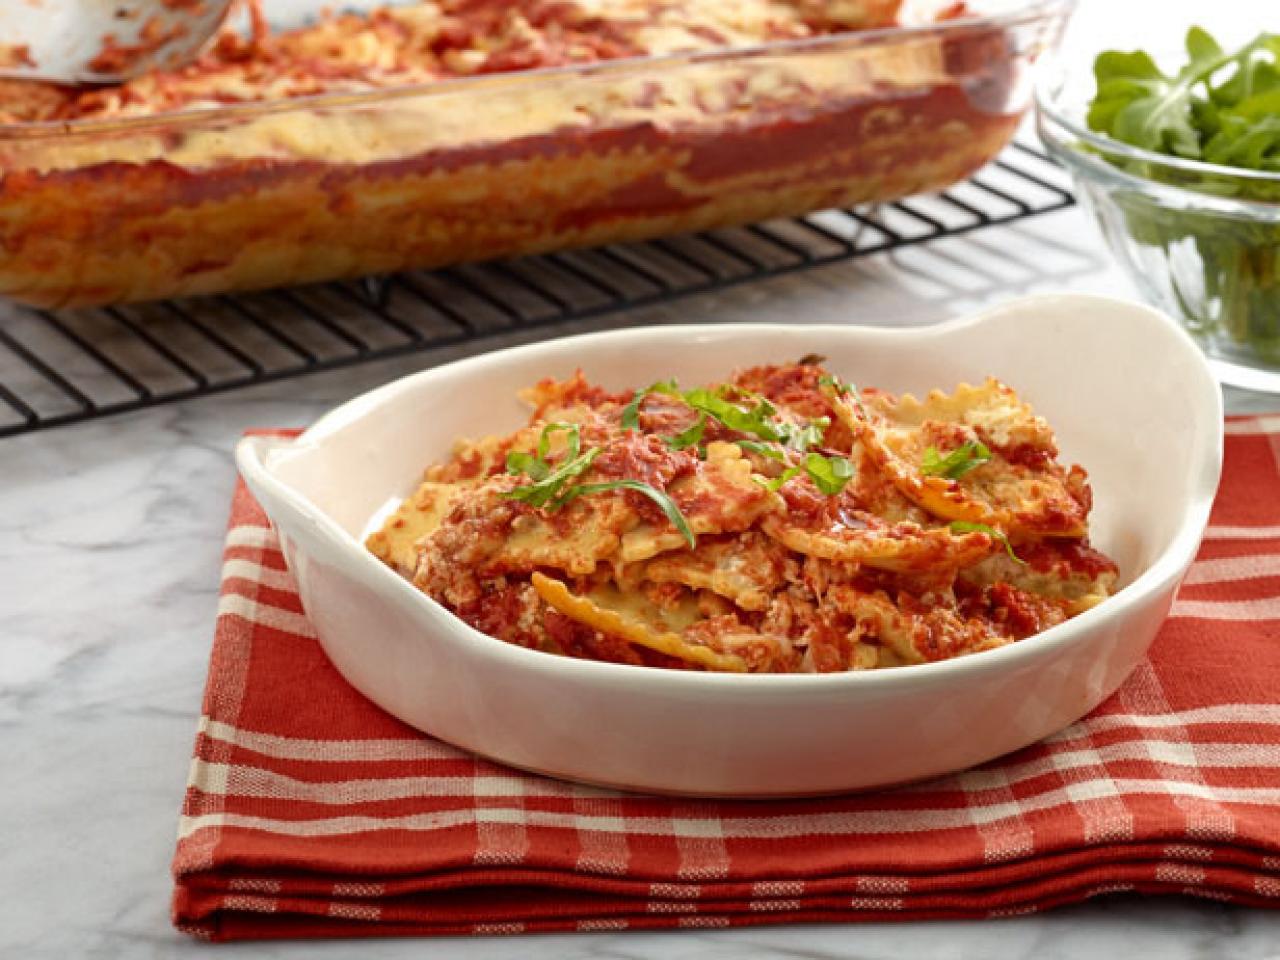 Ravioli Lasagna Recipe